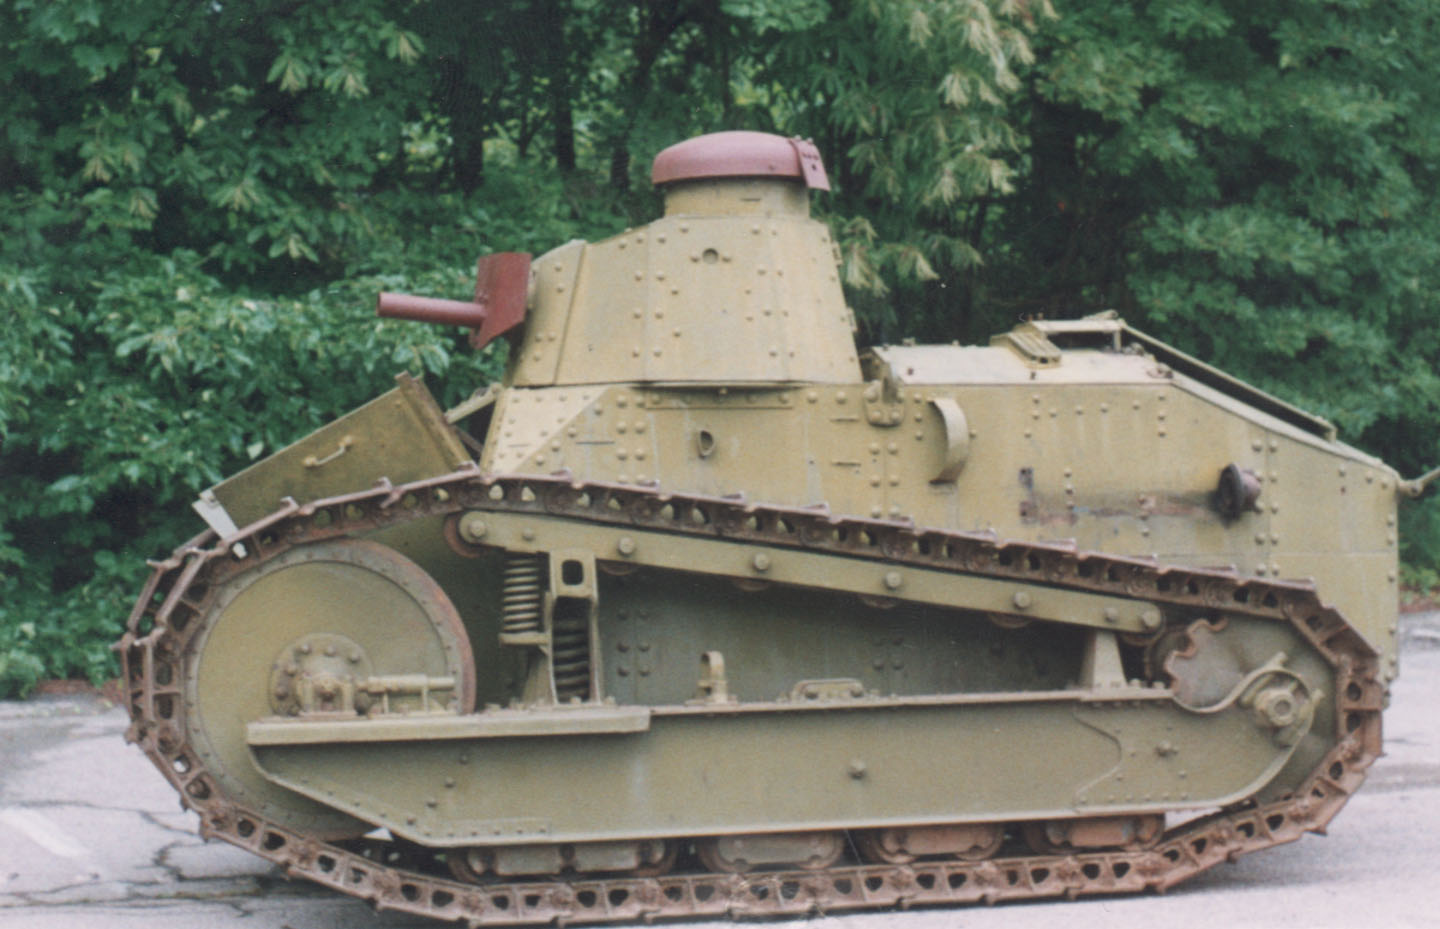 Evolution of the Tank